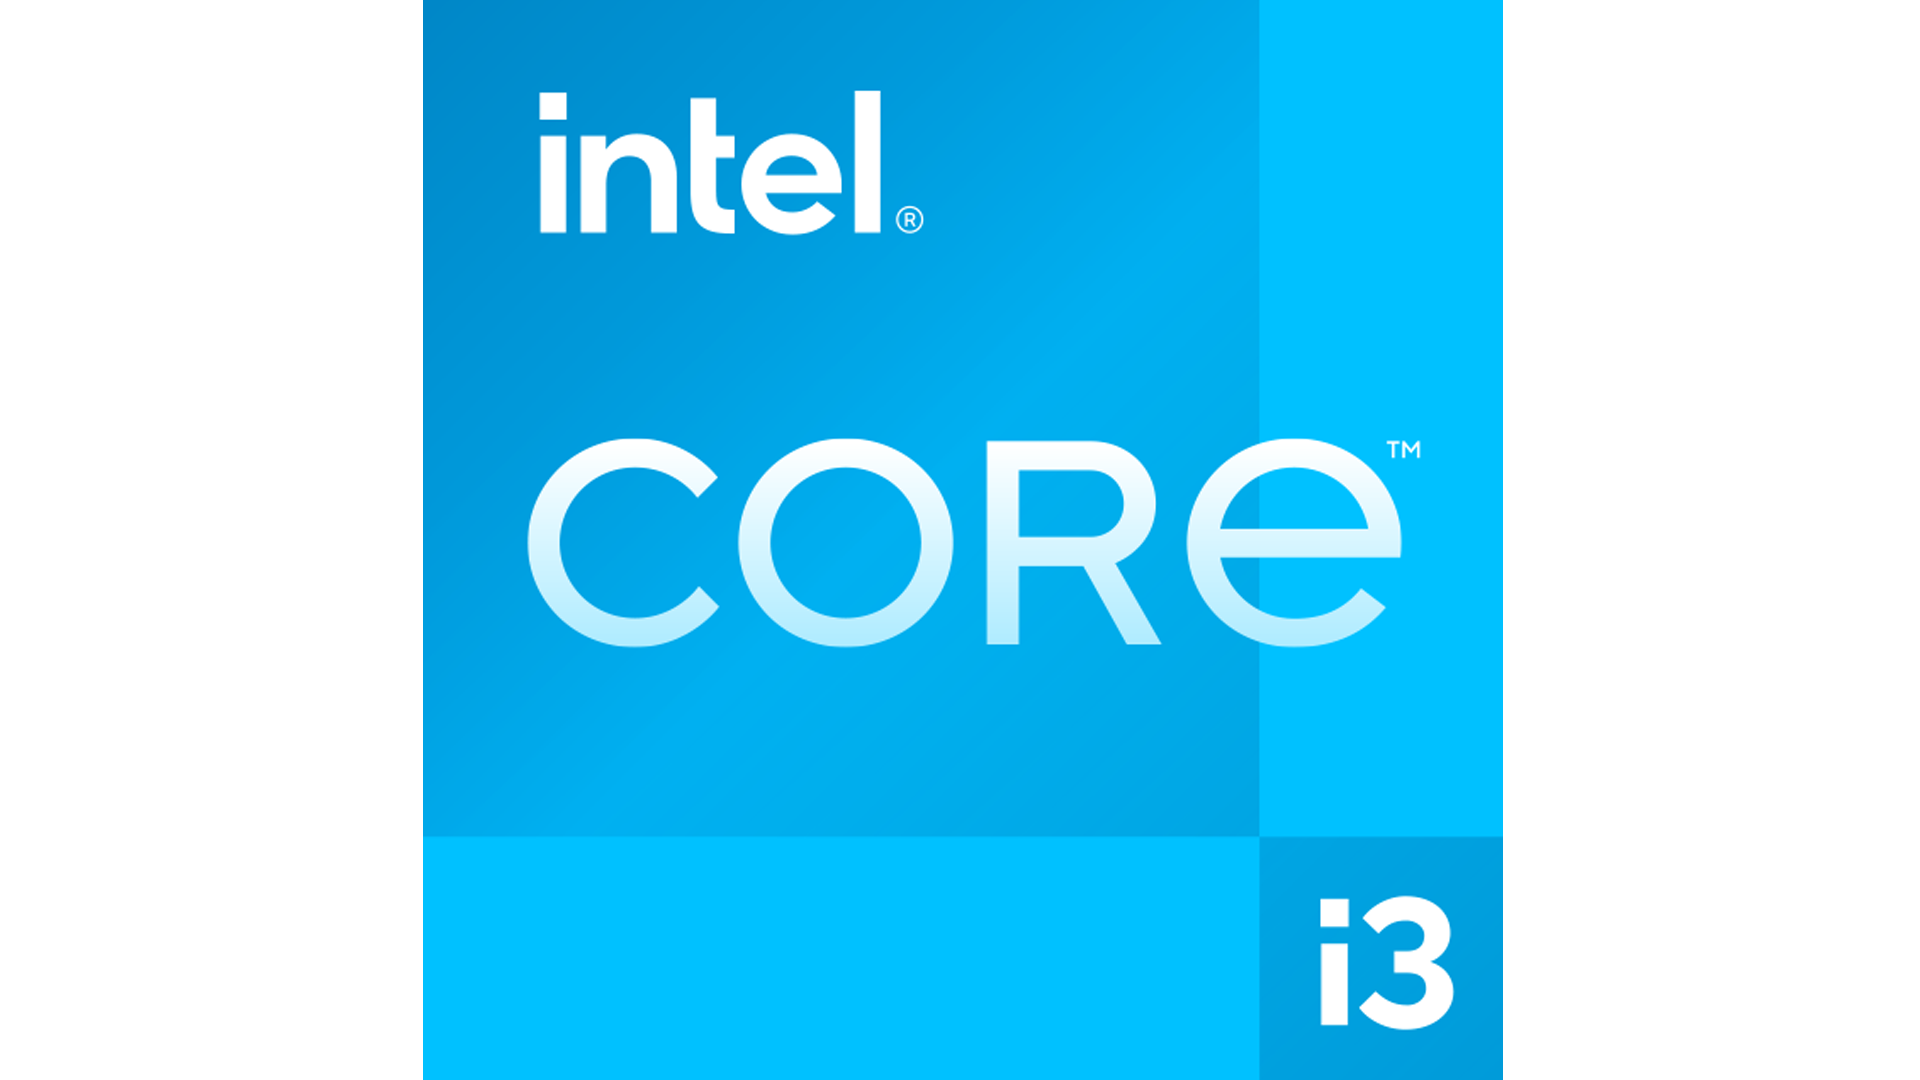 Intel® Core™ i3-1115G4 Processor